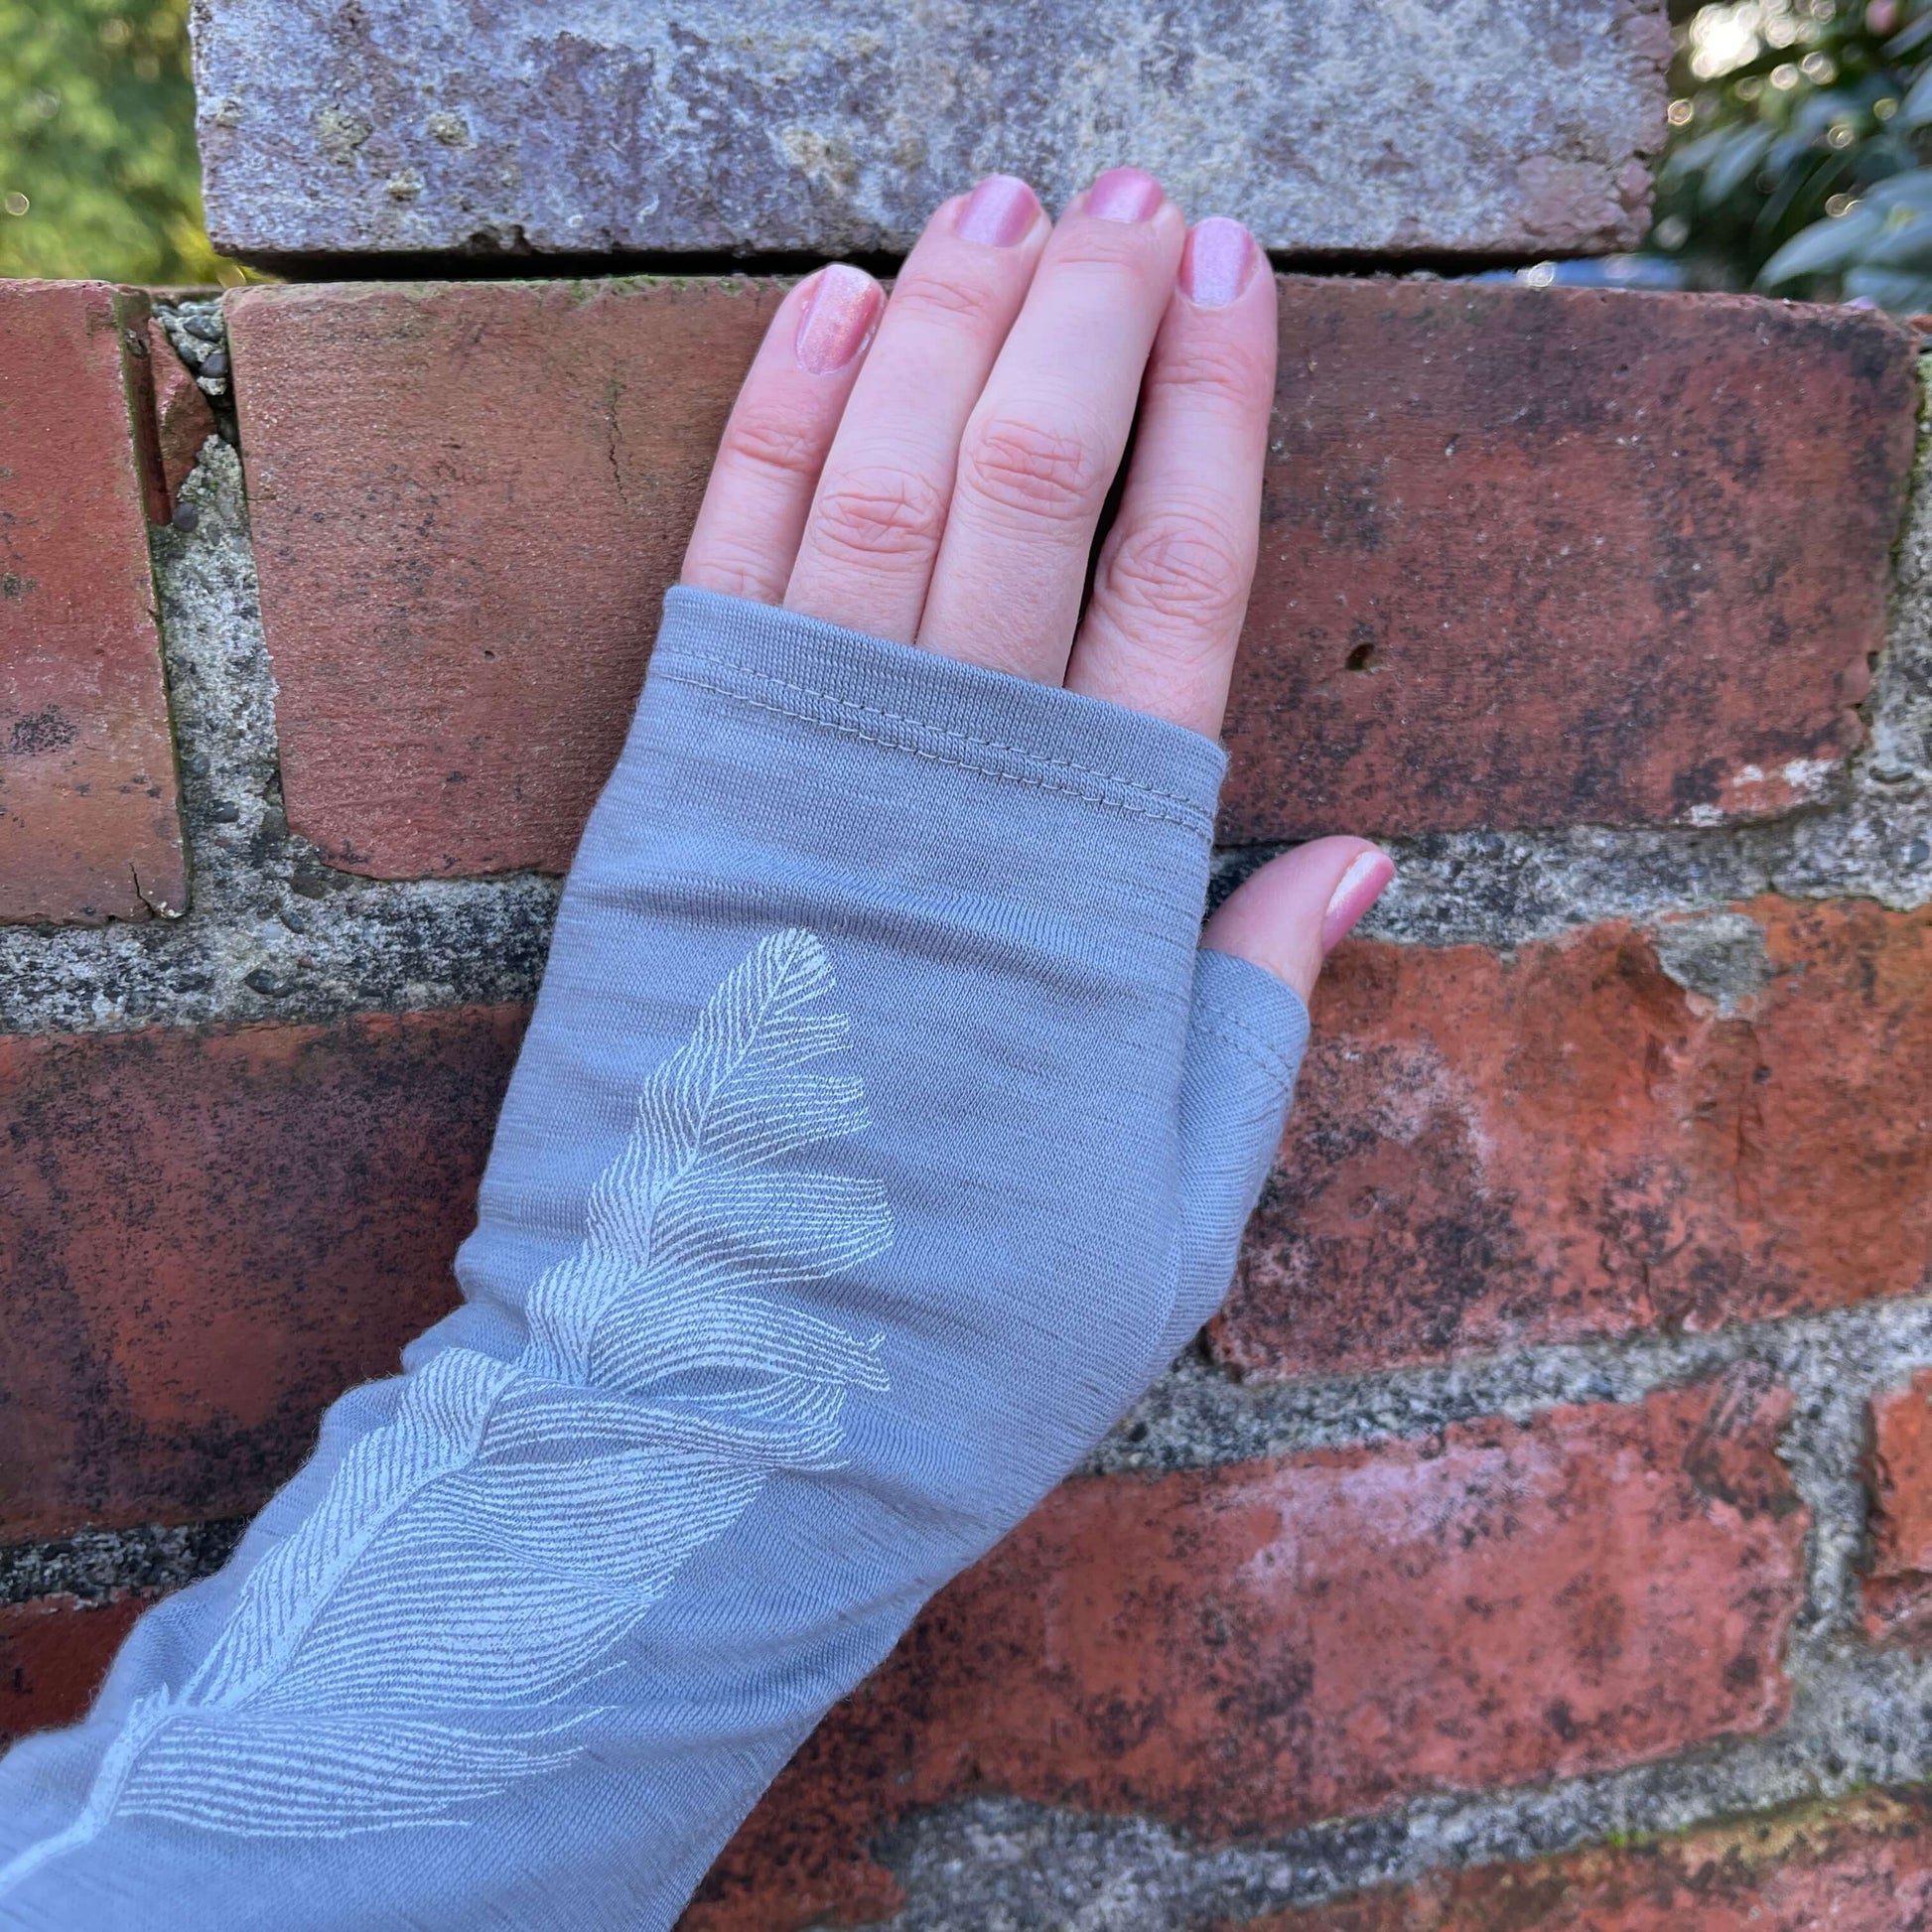 Fingerless merino gloves in light grey with white feather print.